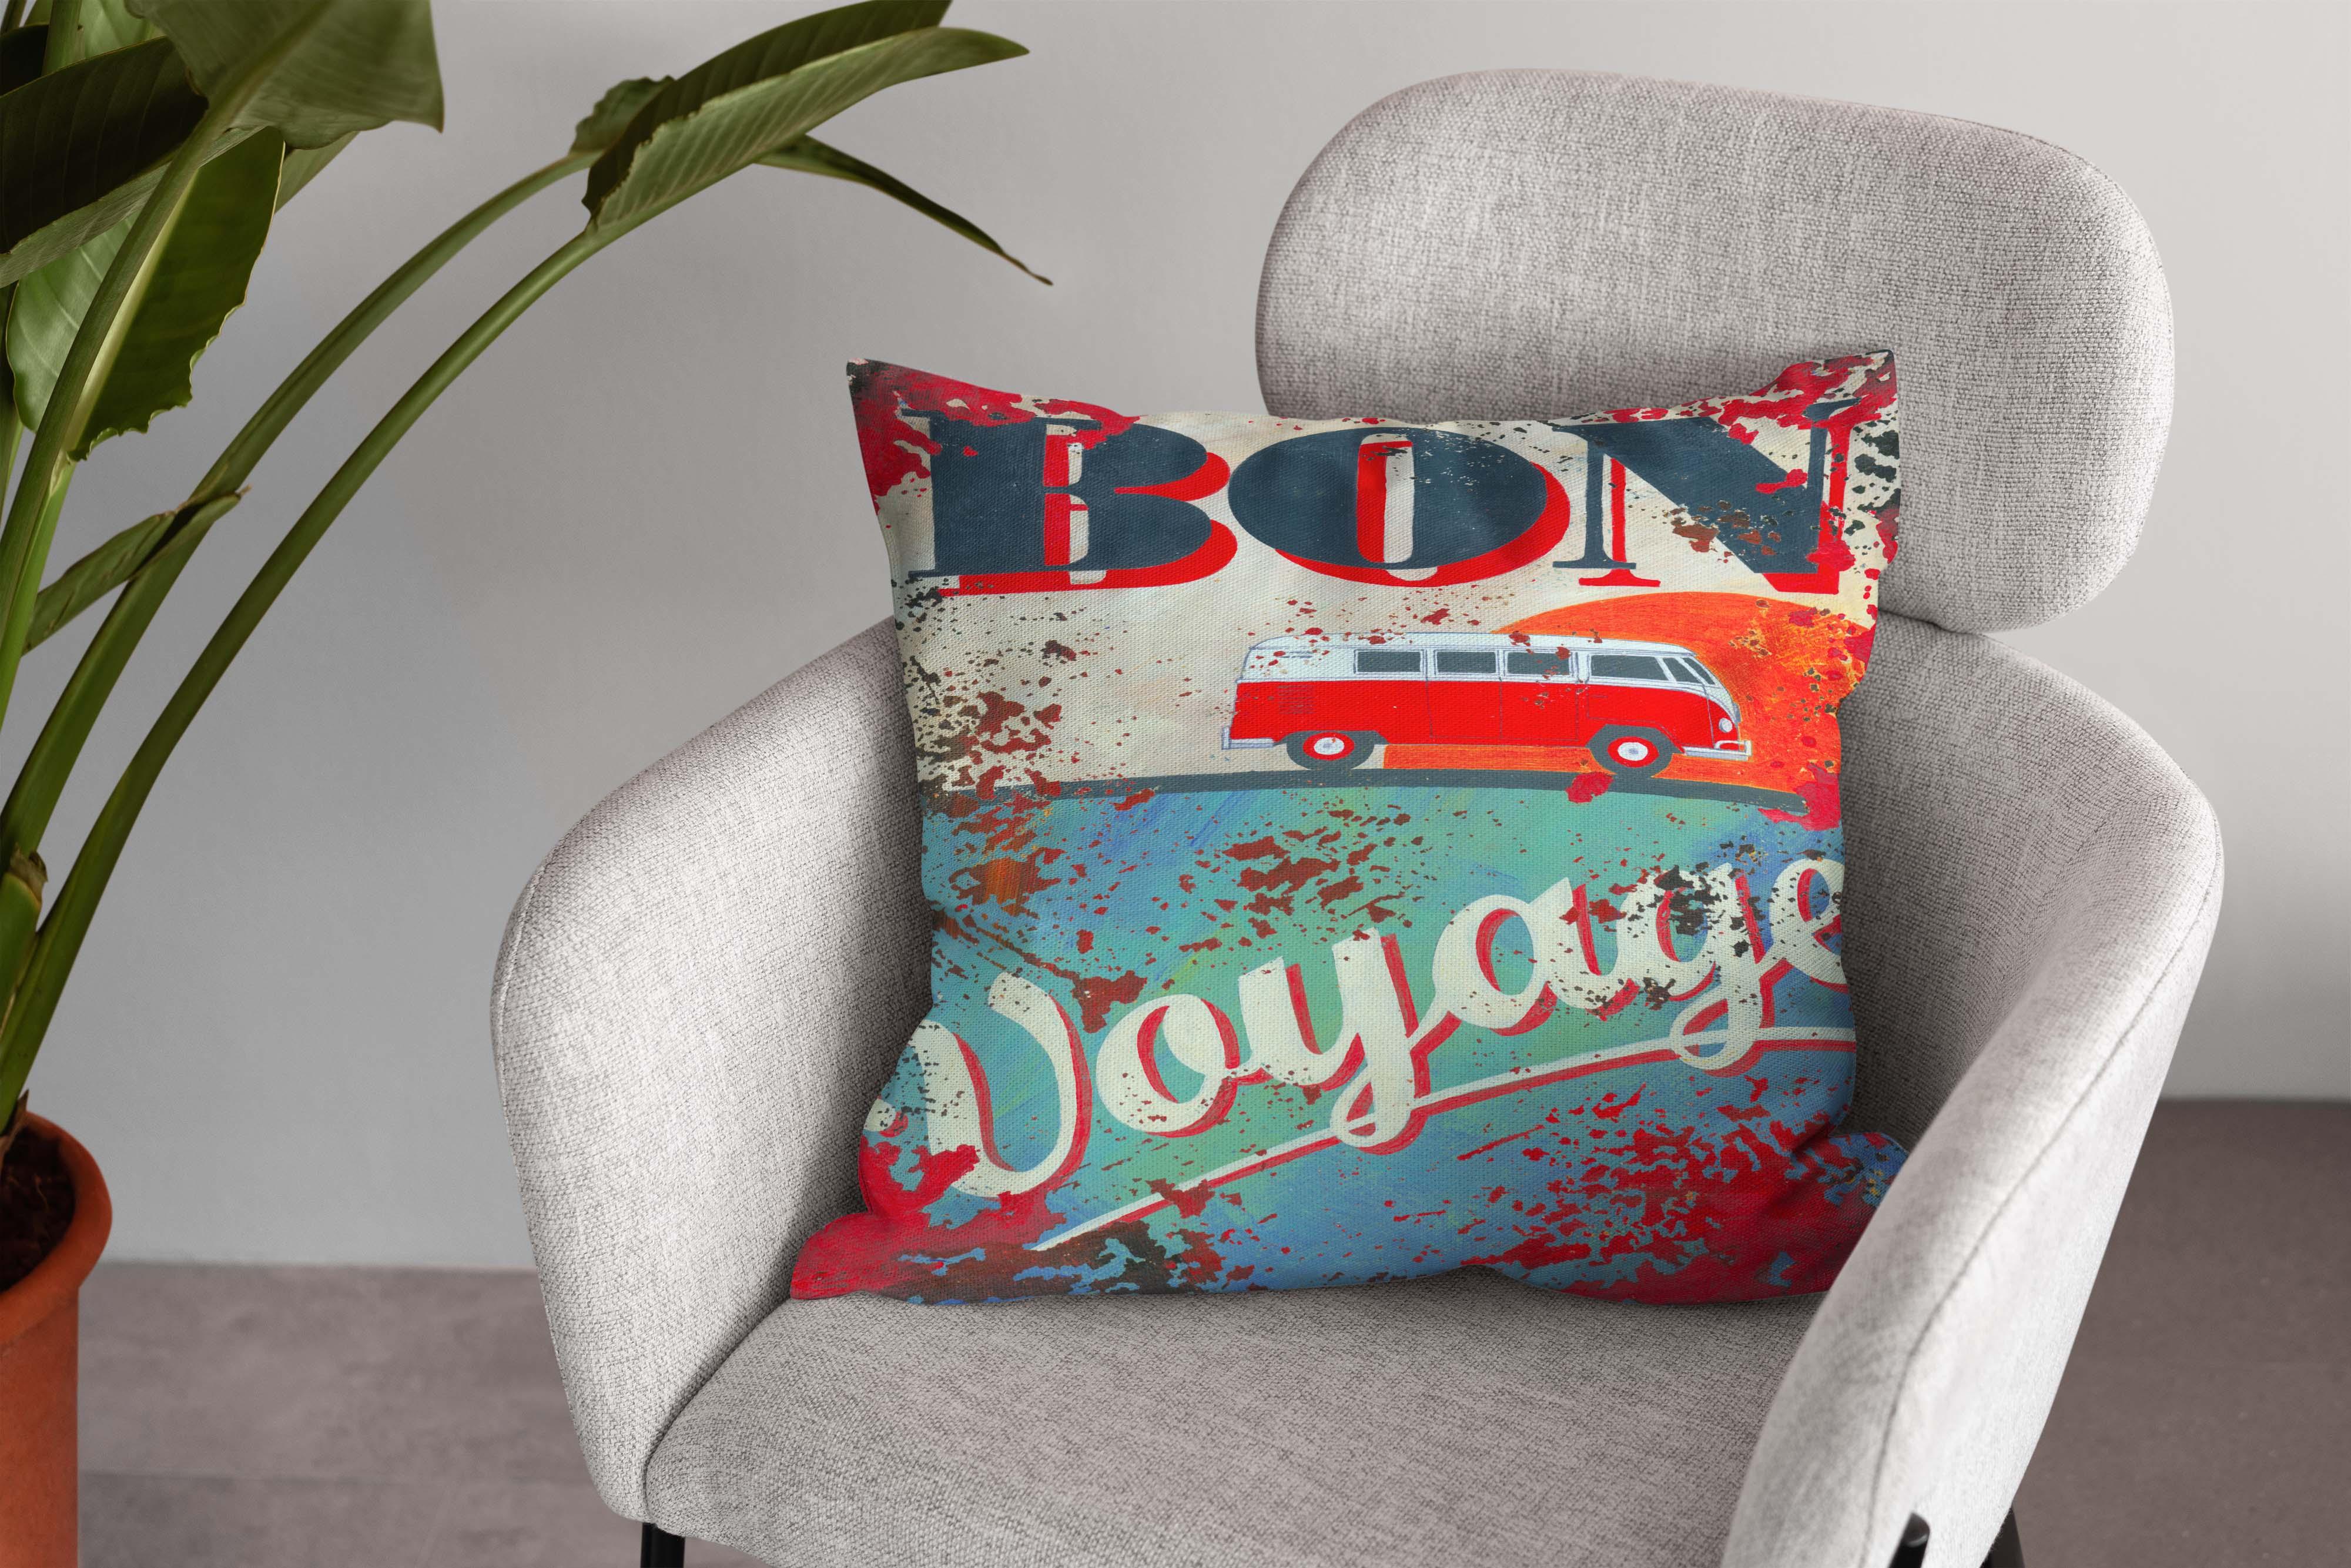 Bon Voyage - Martin Wiscombe - Art Print Cushion